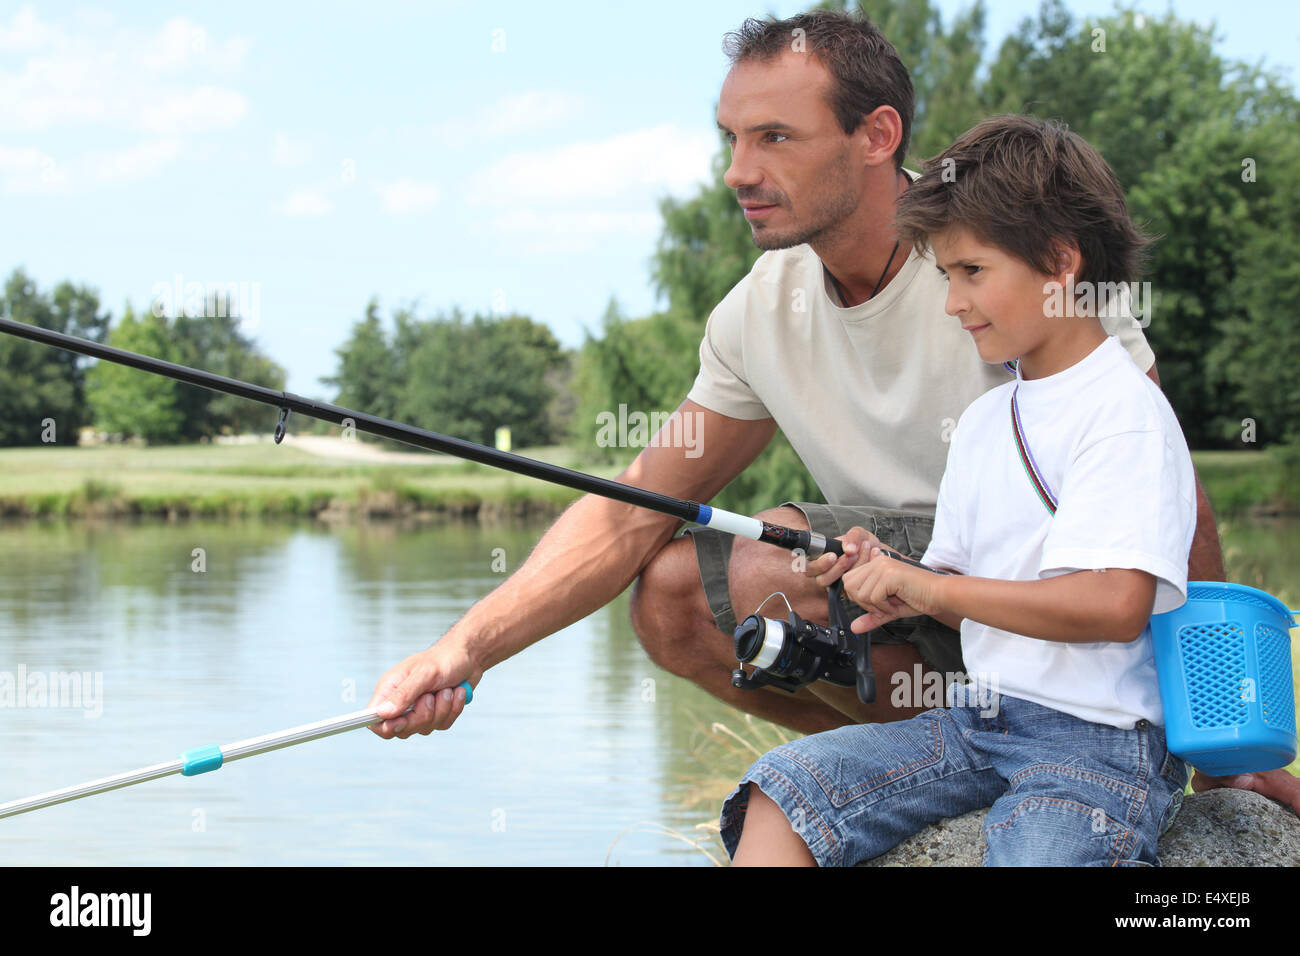 Сын ловит рыбу. Папа и сын рыбачат. Отец и сын на рыбалке. Папа с сыном на рыбалке. Отец с сыном на рыбалке картинки.